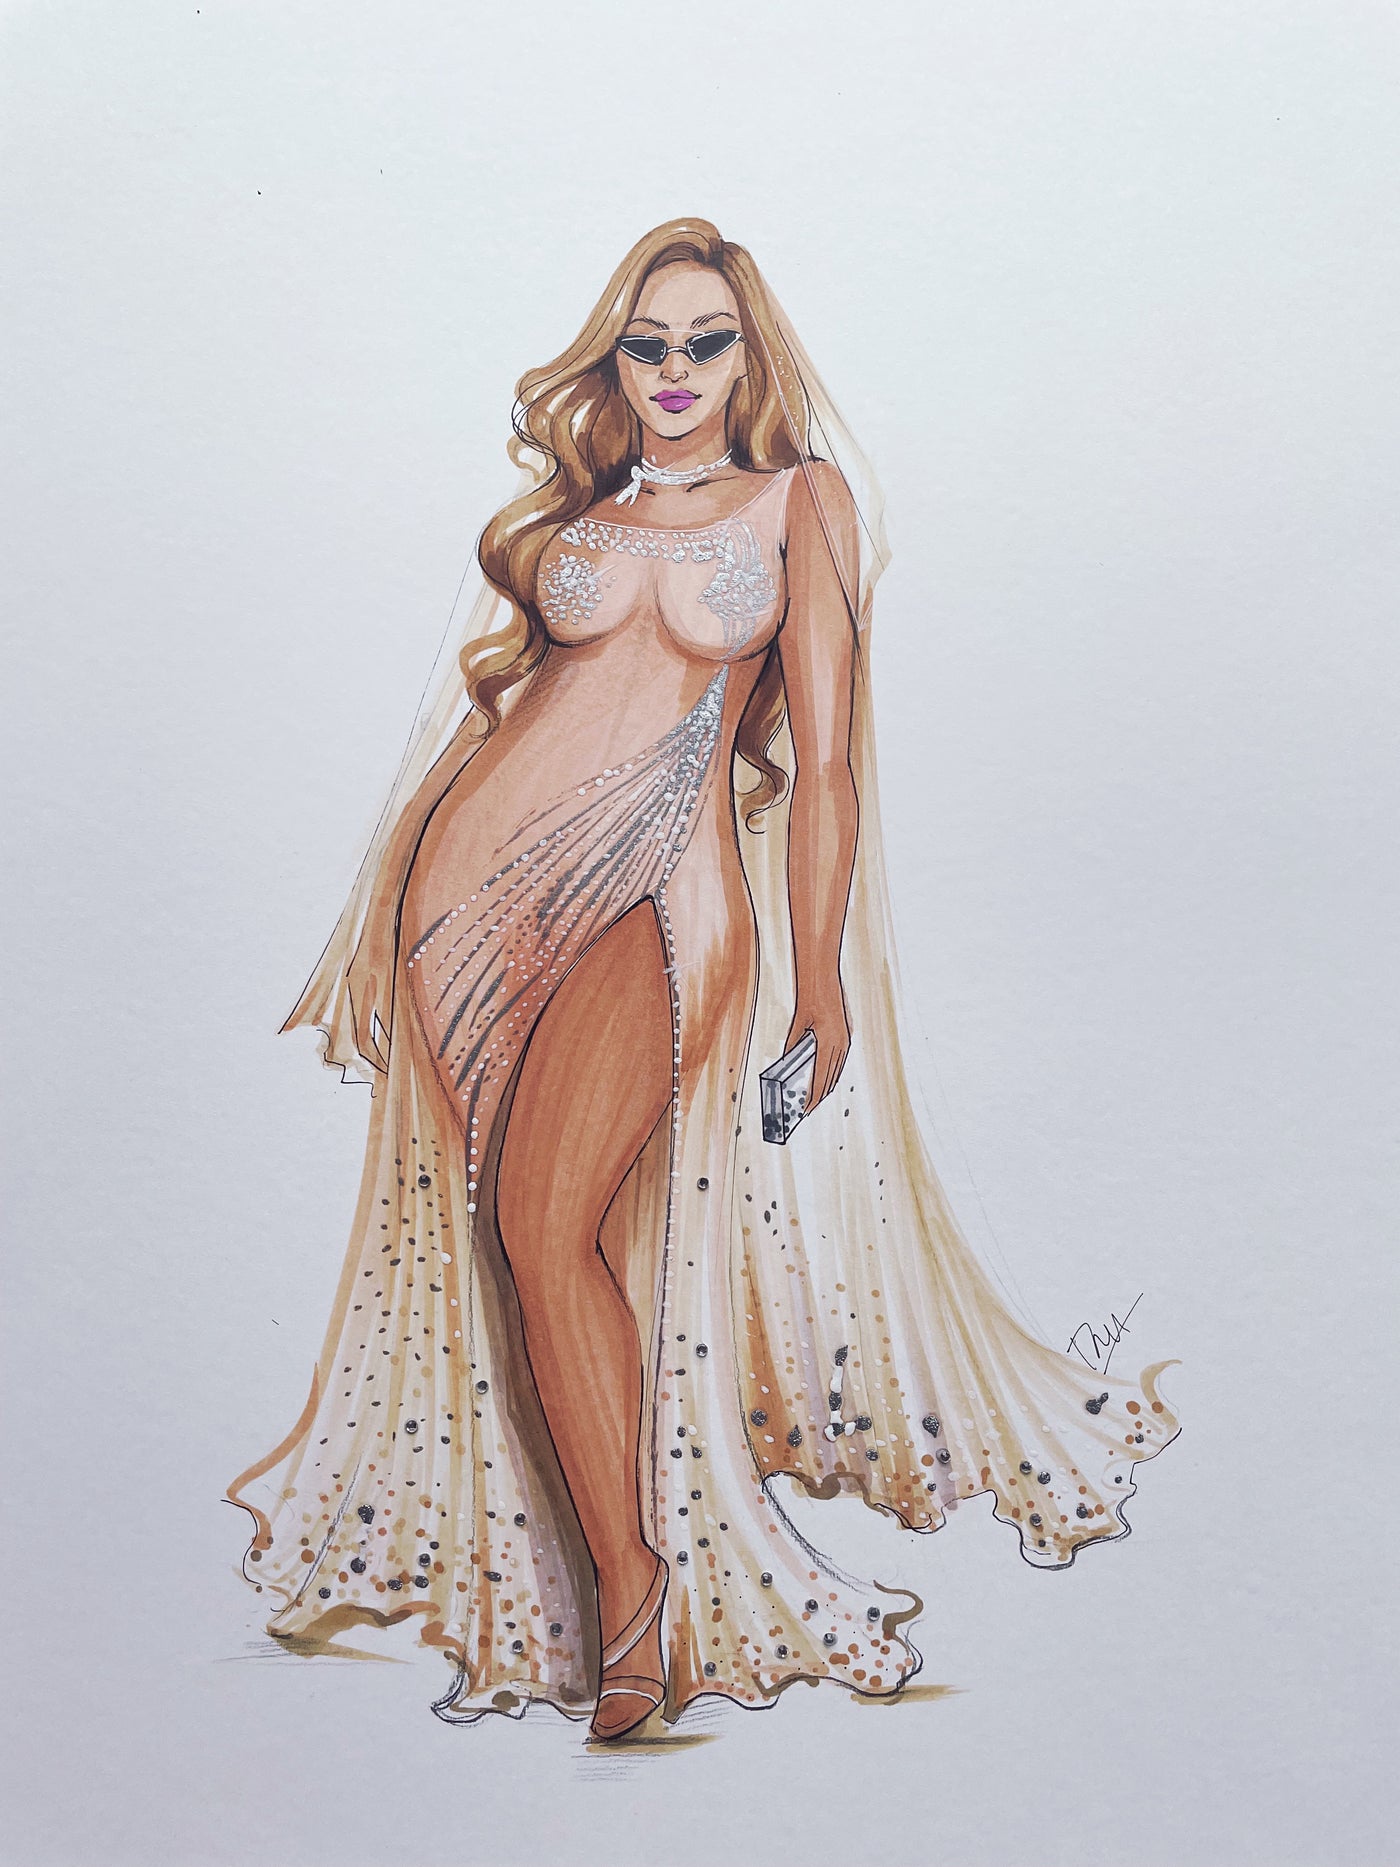 Beyoncé - Renaissance Original Art